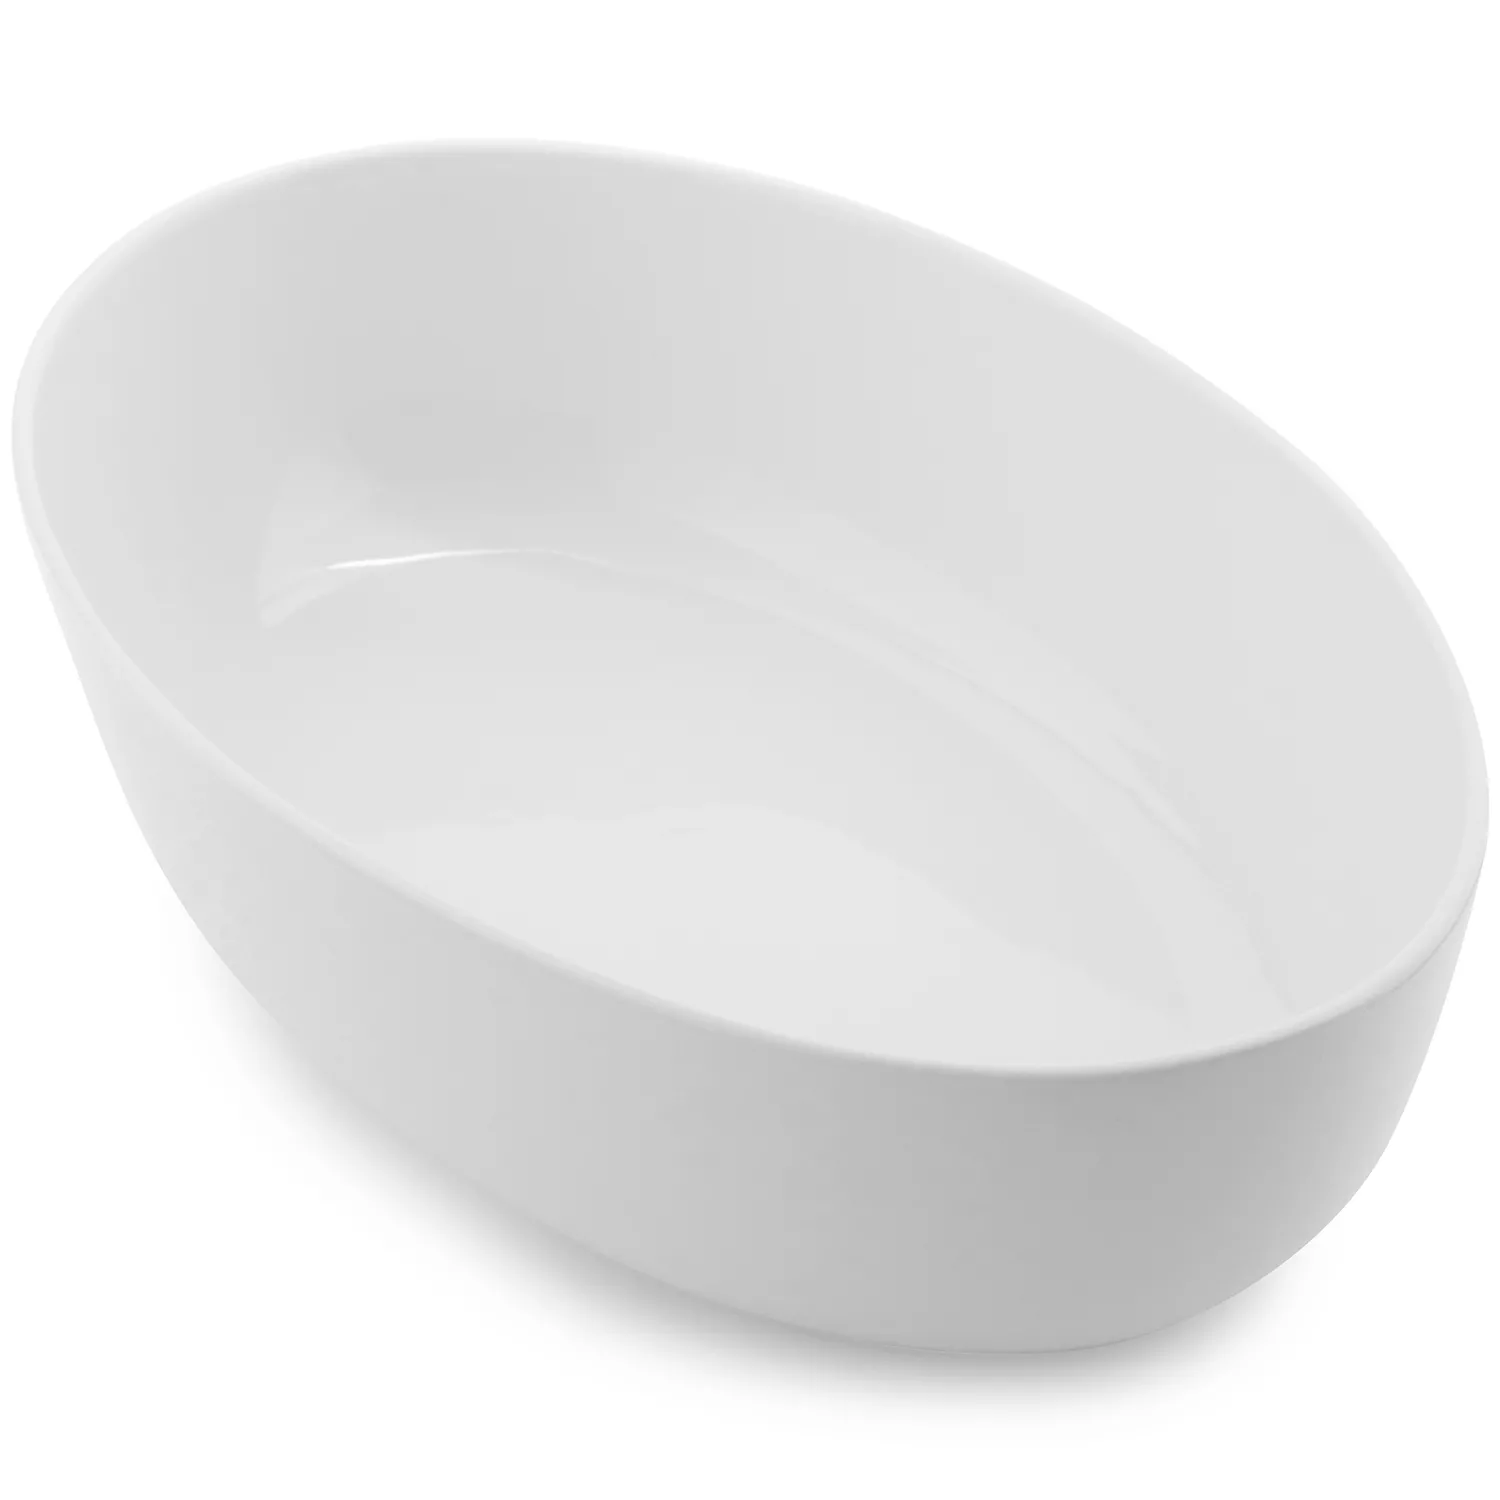 Better Homes & Gardens Porcelain Square Bowls, White, Set of 6